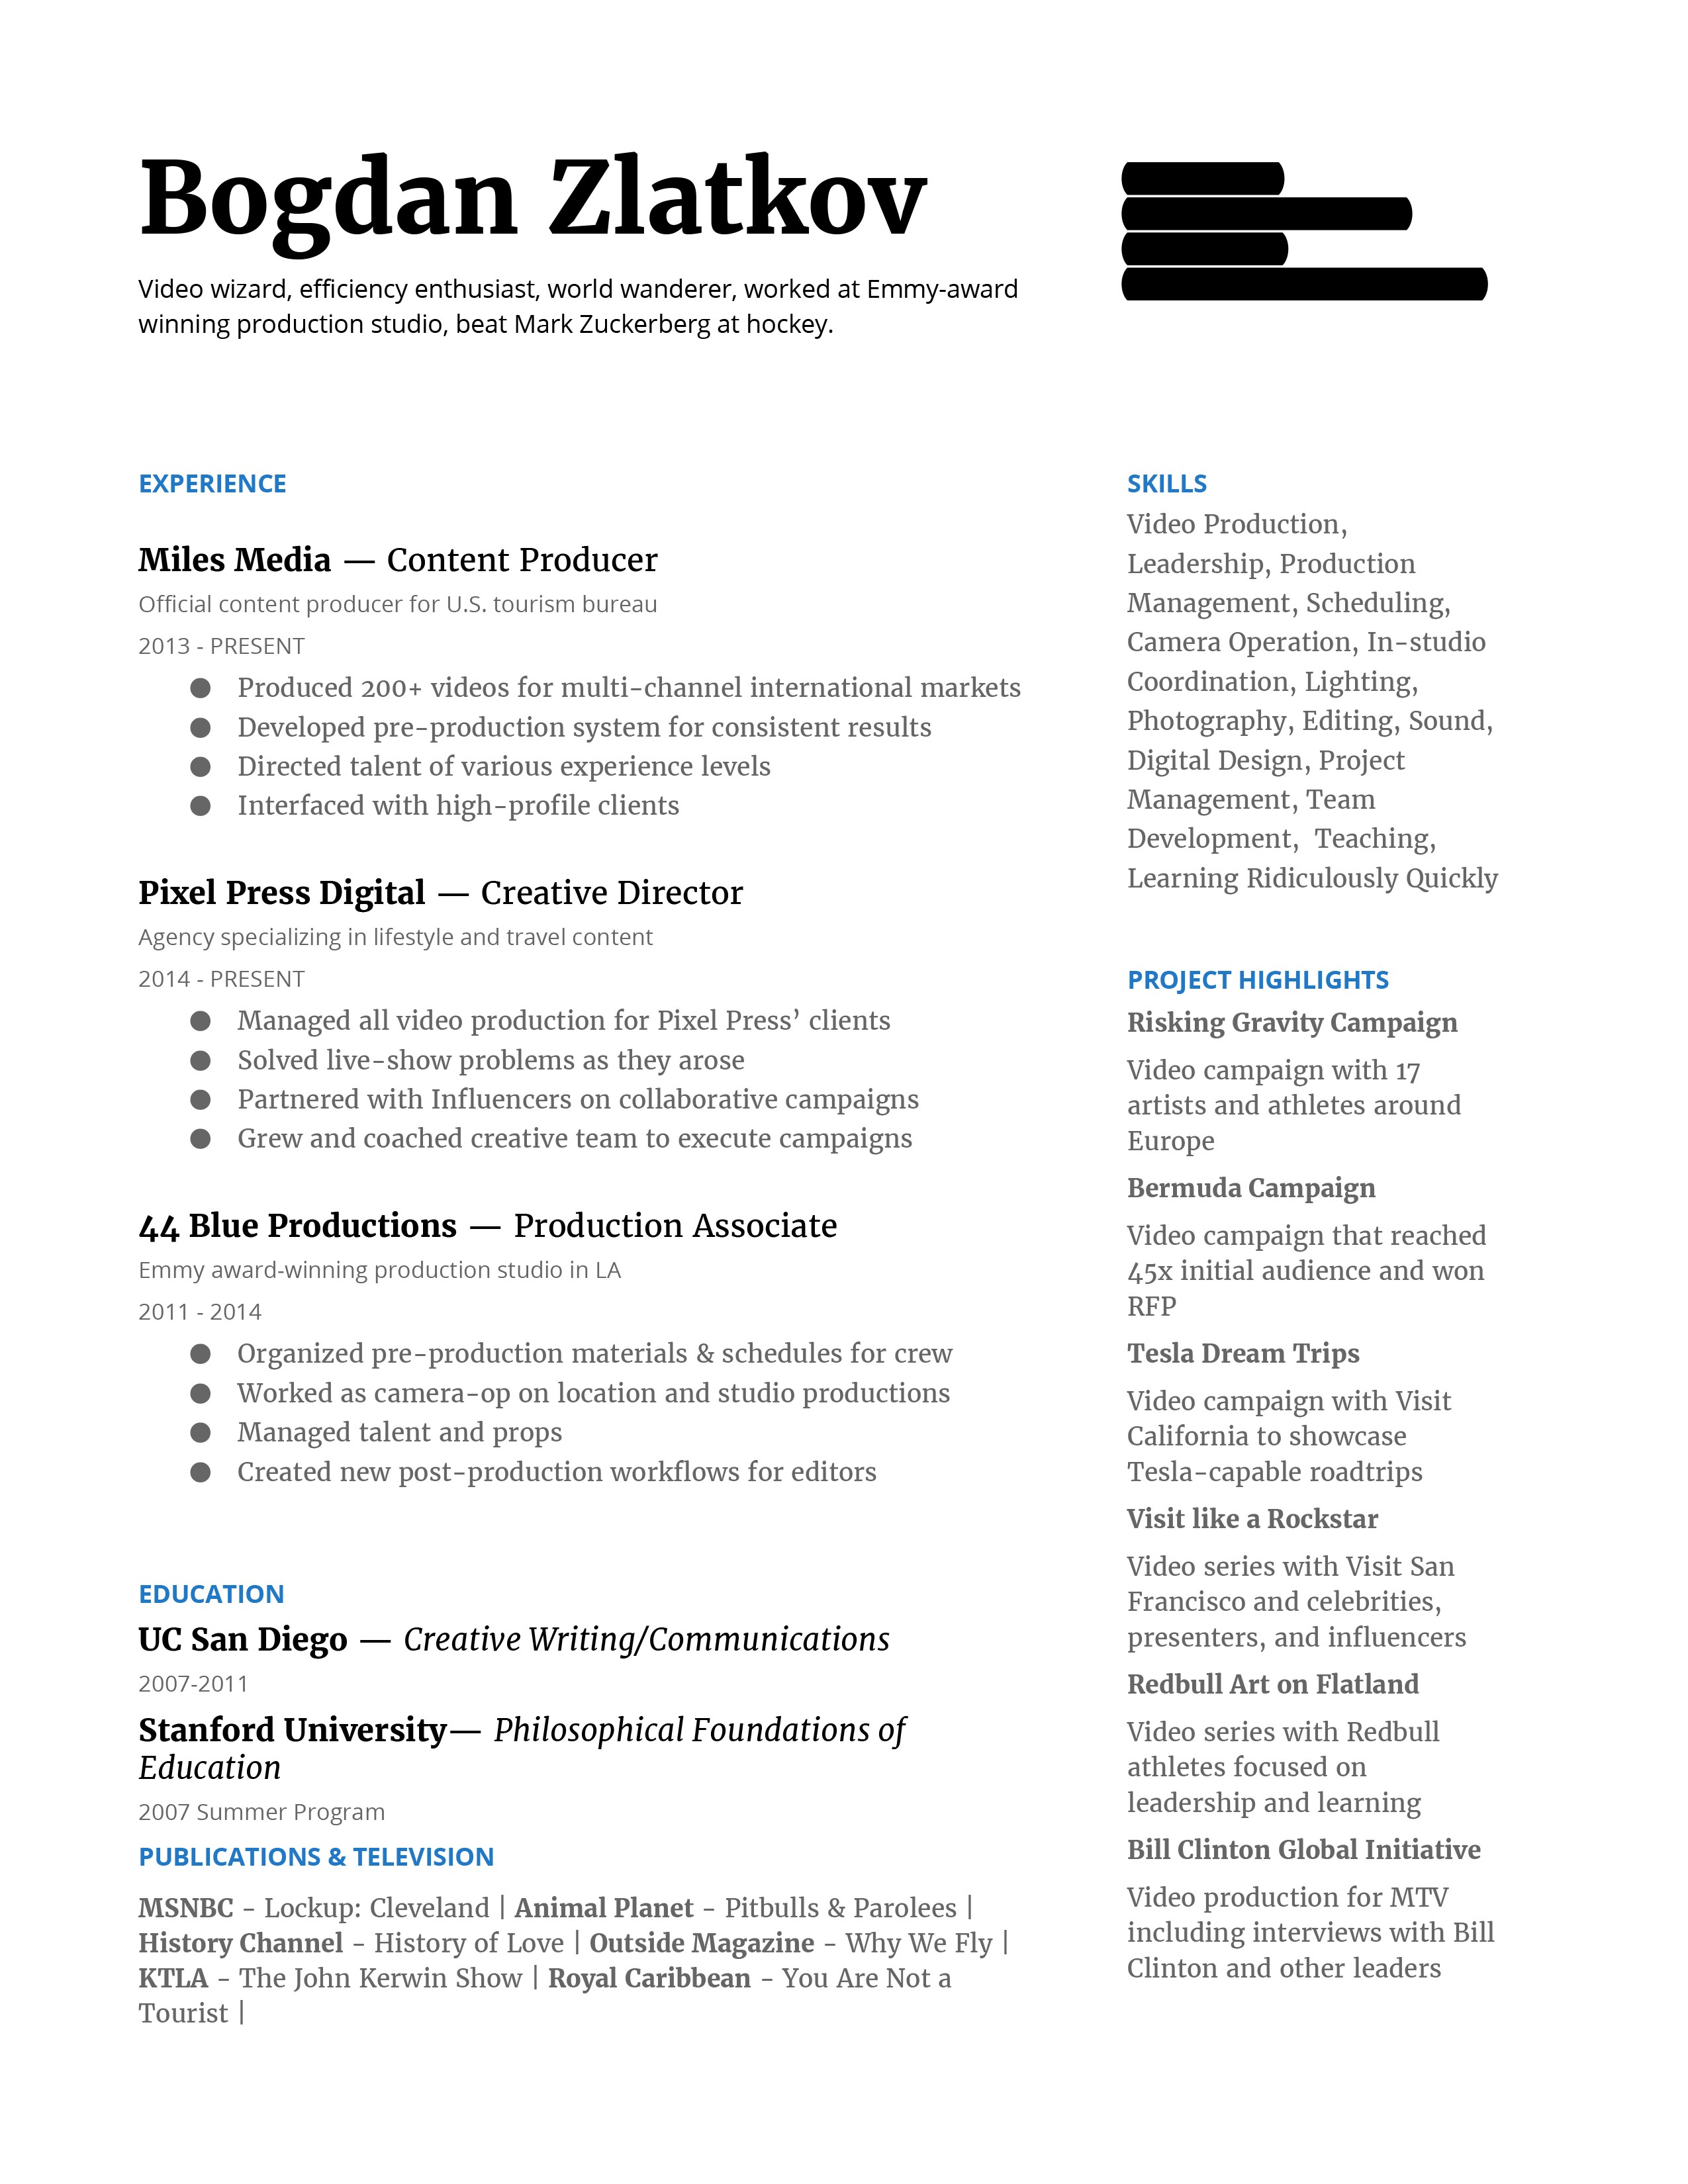 How To Fill Out A Resume 134z0fucbtjwvzislfoyacg how to fill out a resume|wikiresume.com